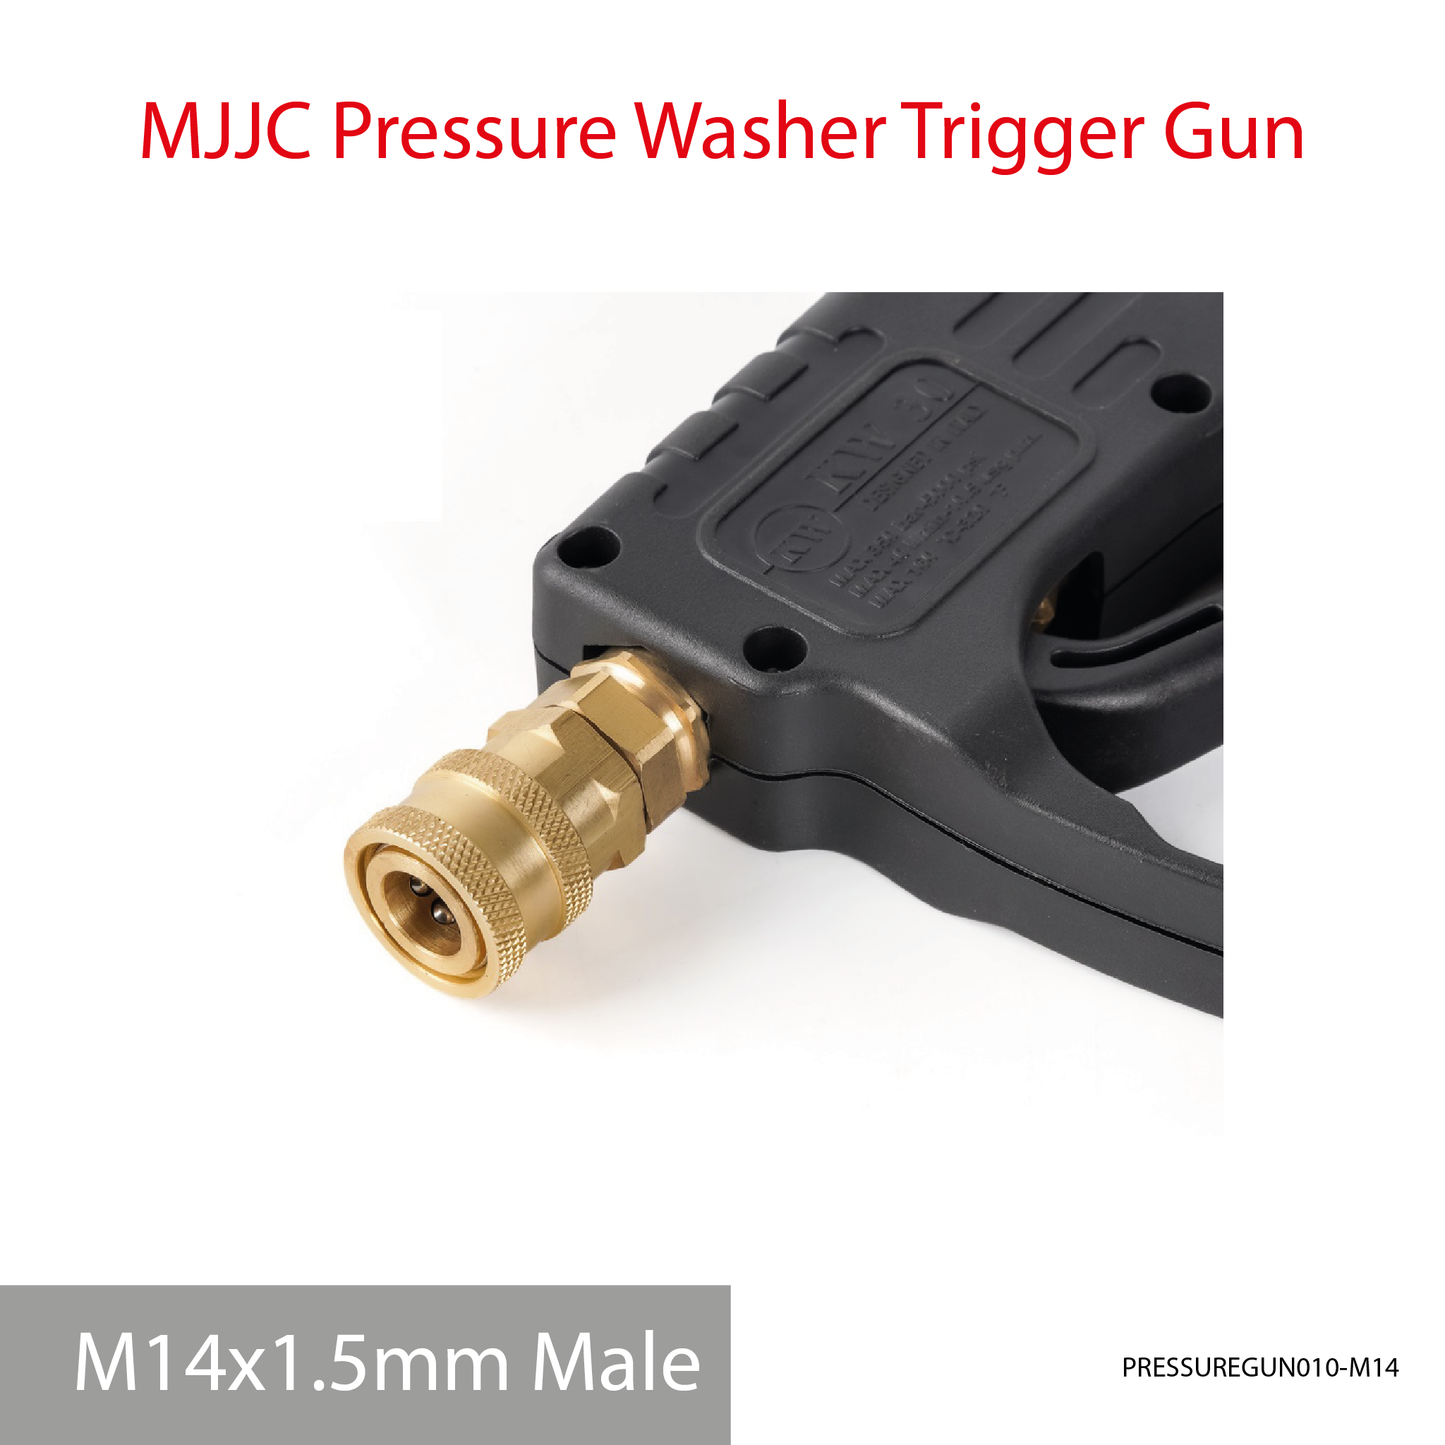 M14x1.5mm Male Thread - MJJC Light Weight Pressure Washer Short Trigger Gun with Live Swivel